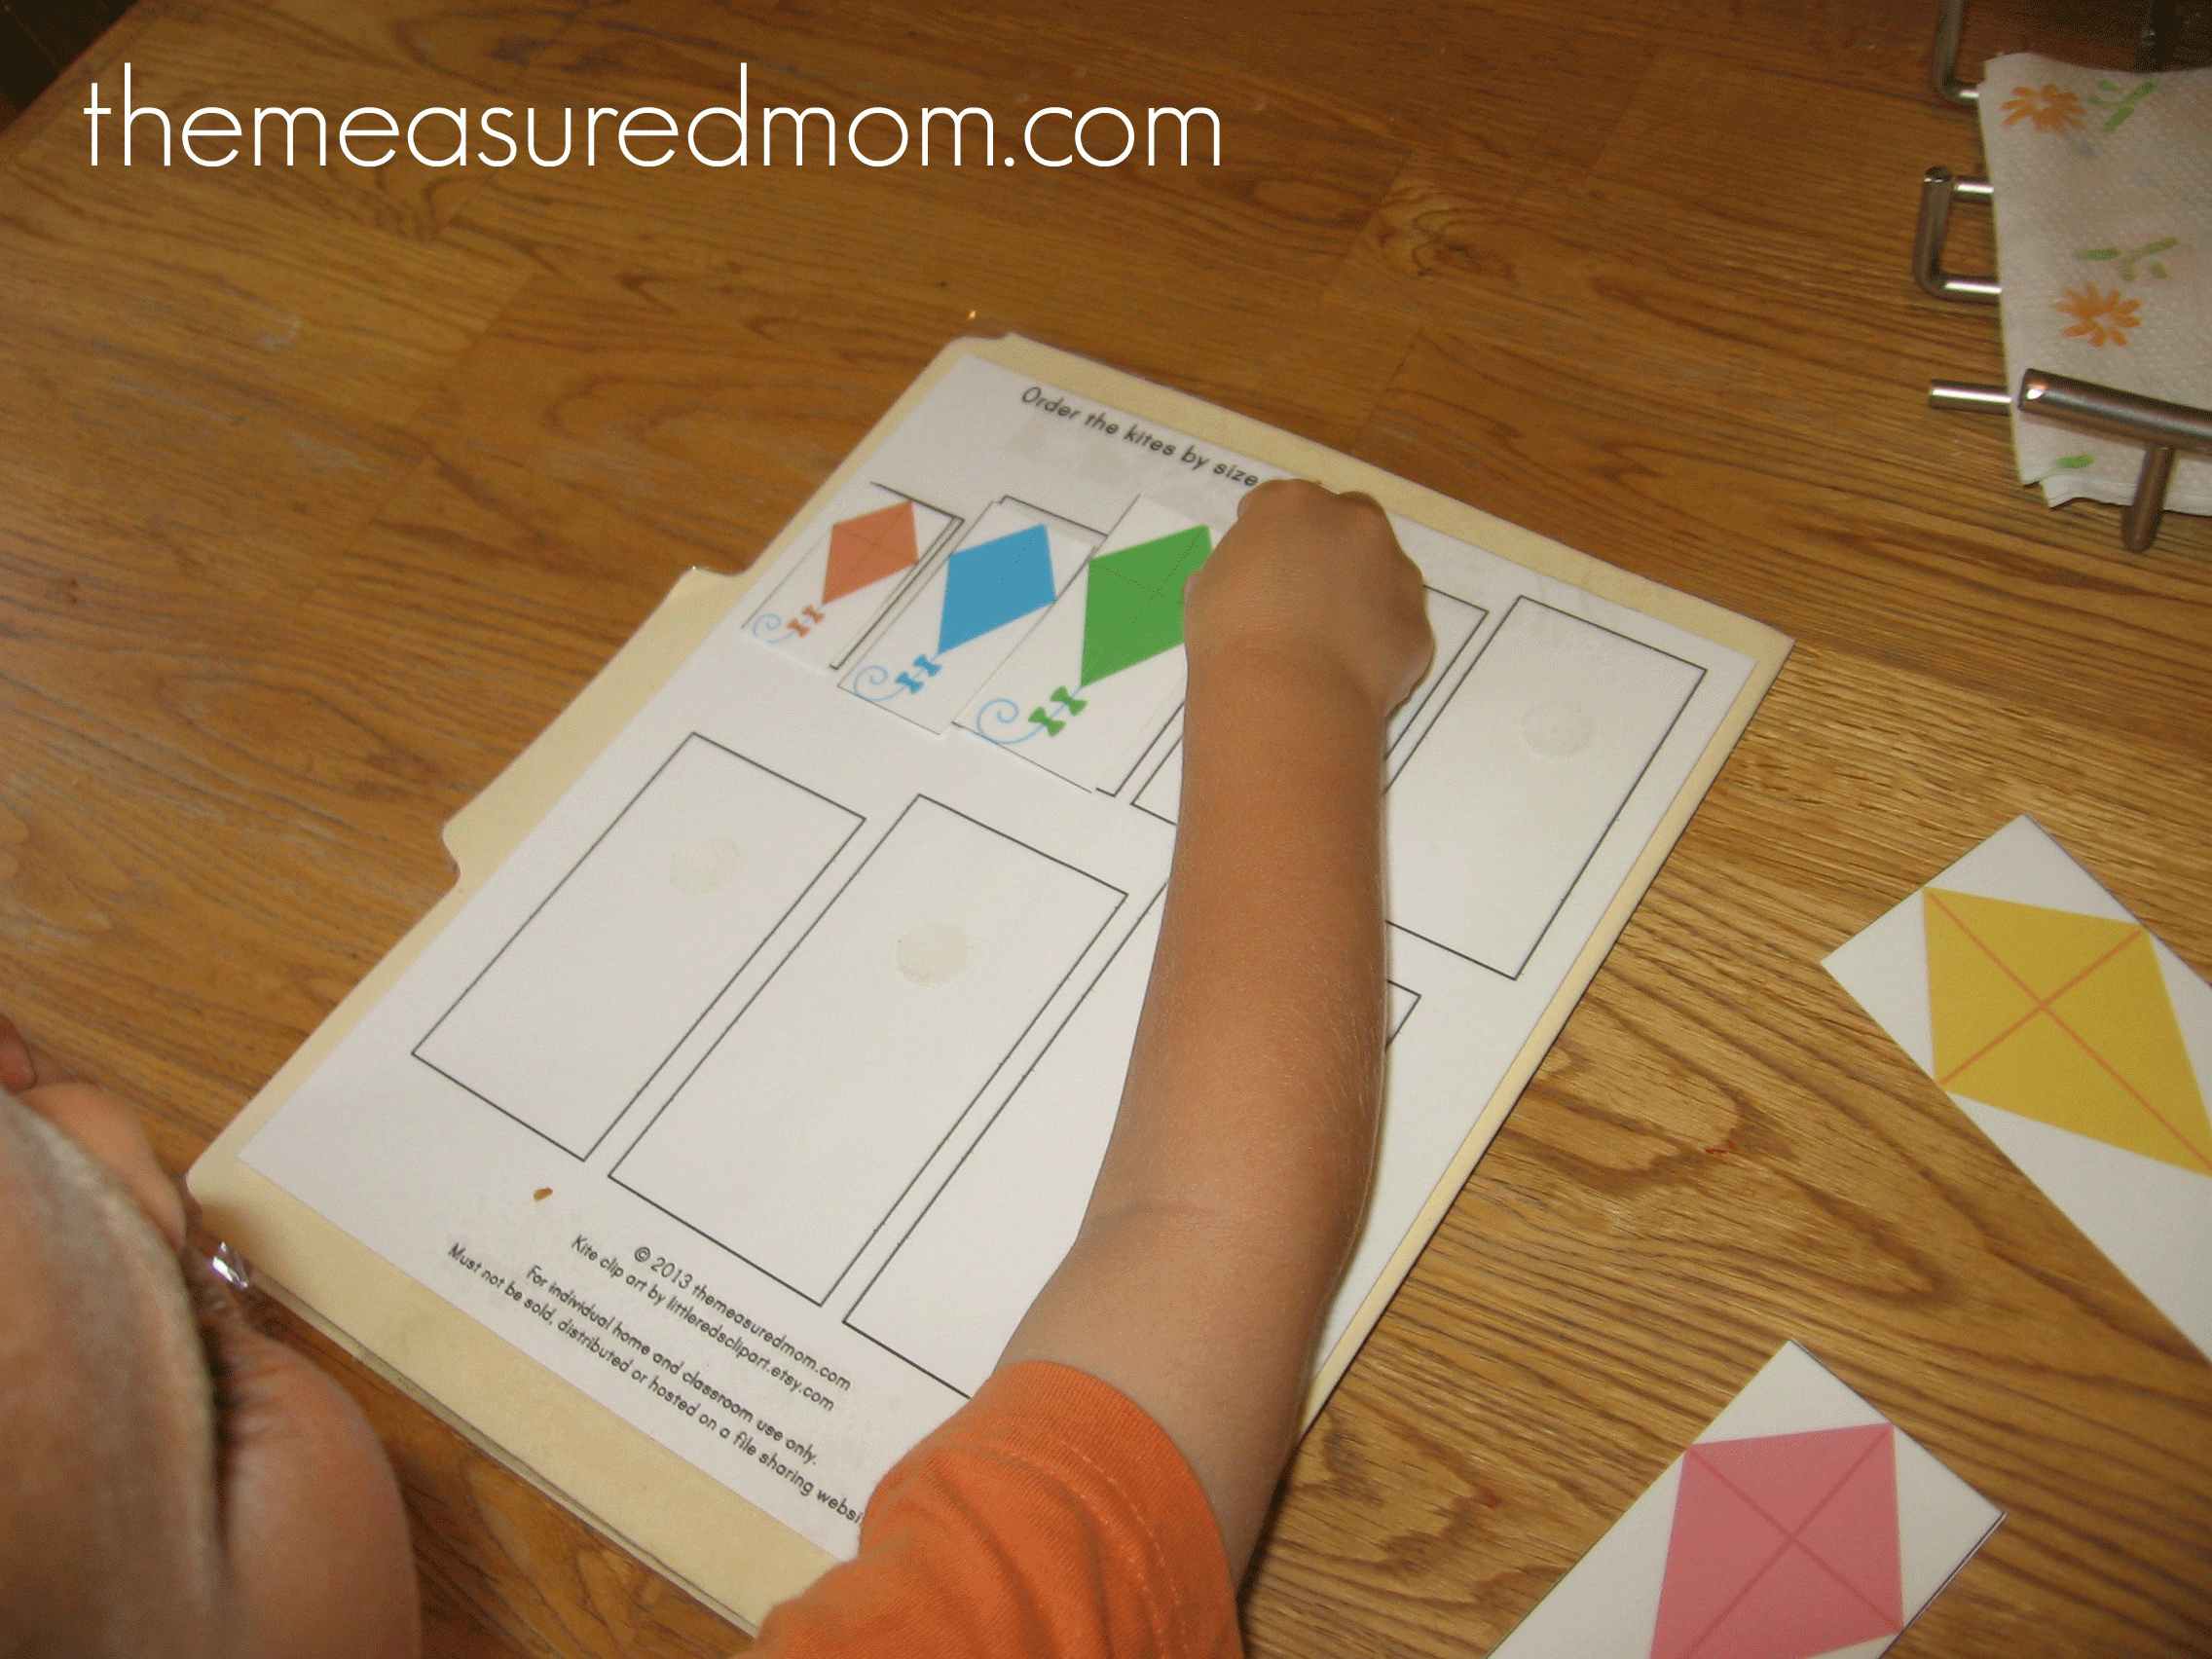 Free File Folder Game For Preschoolers: Kites! - The Measured Mom - Free Printable Math File Folder Games For Preschoolers